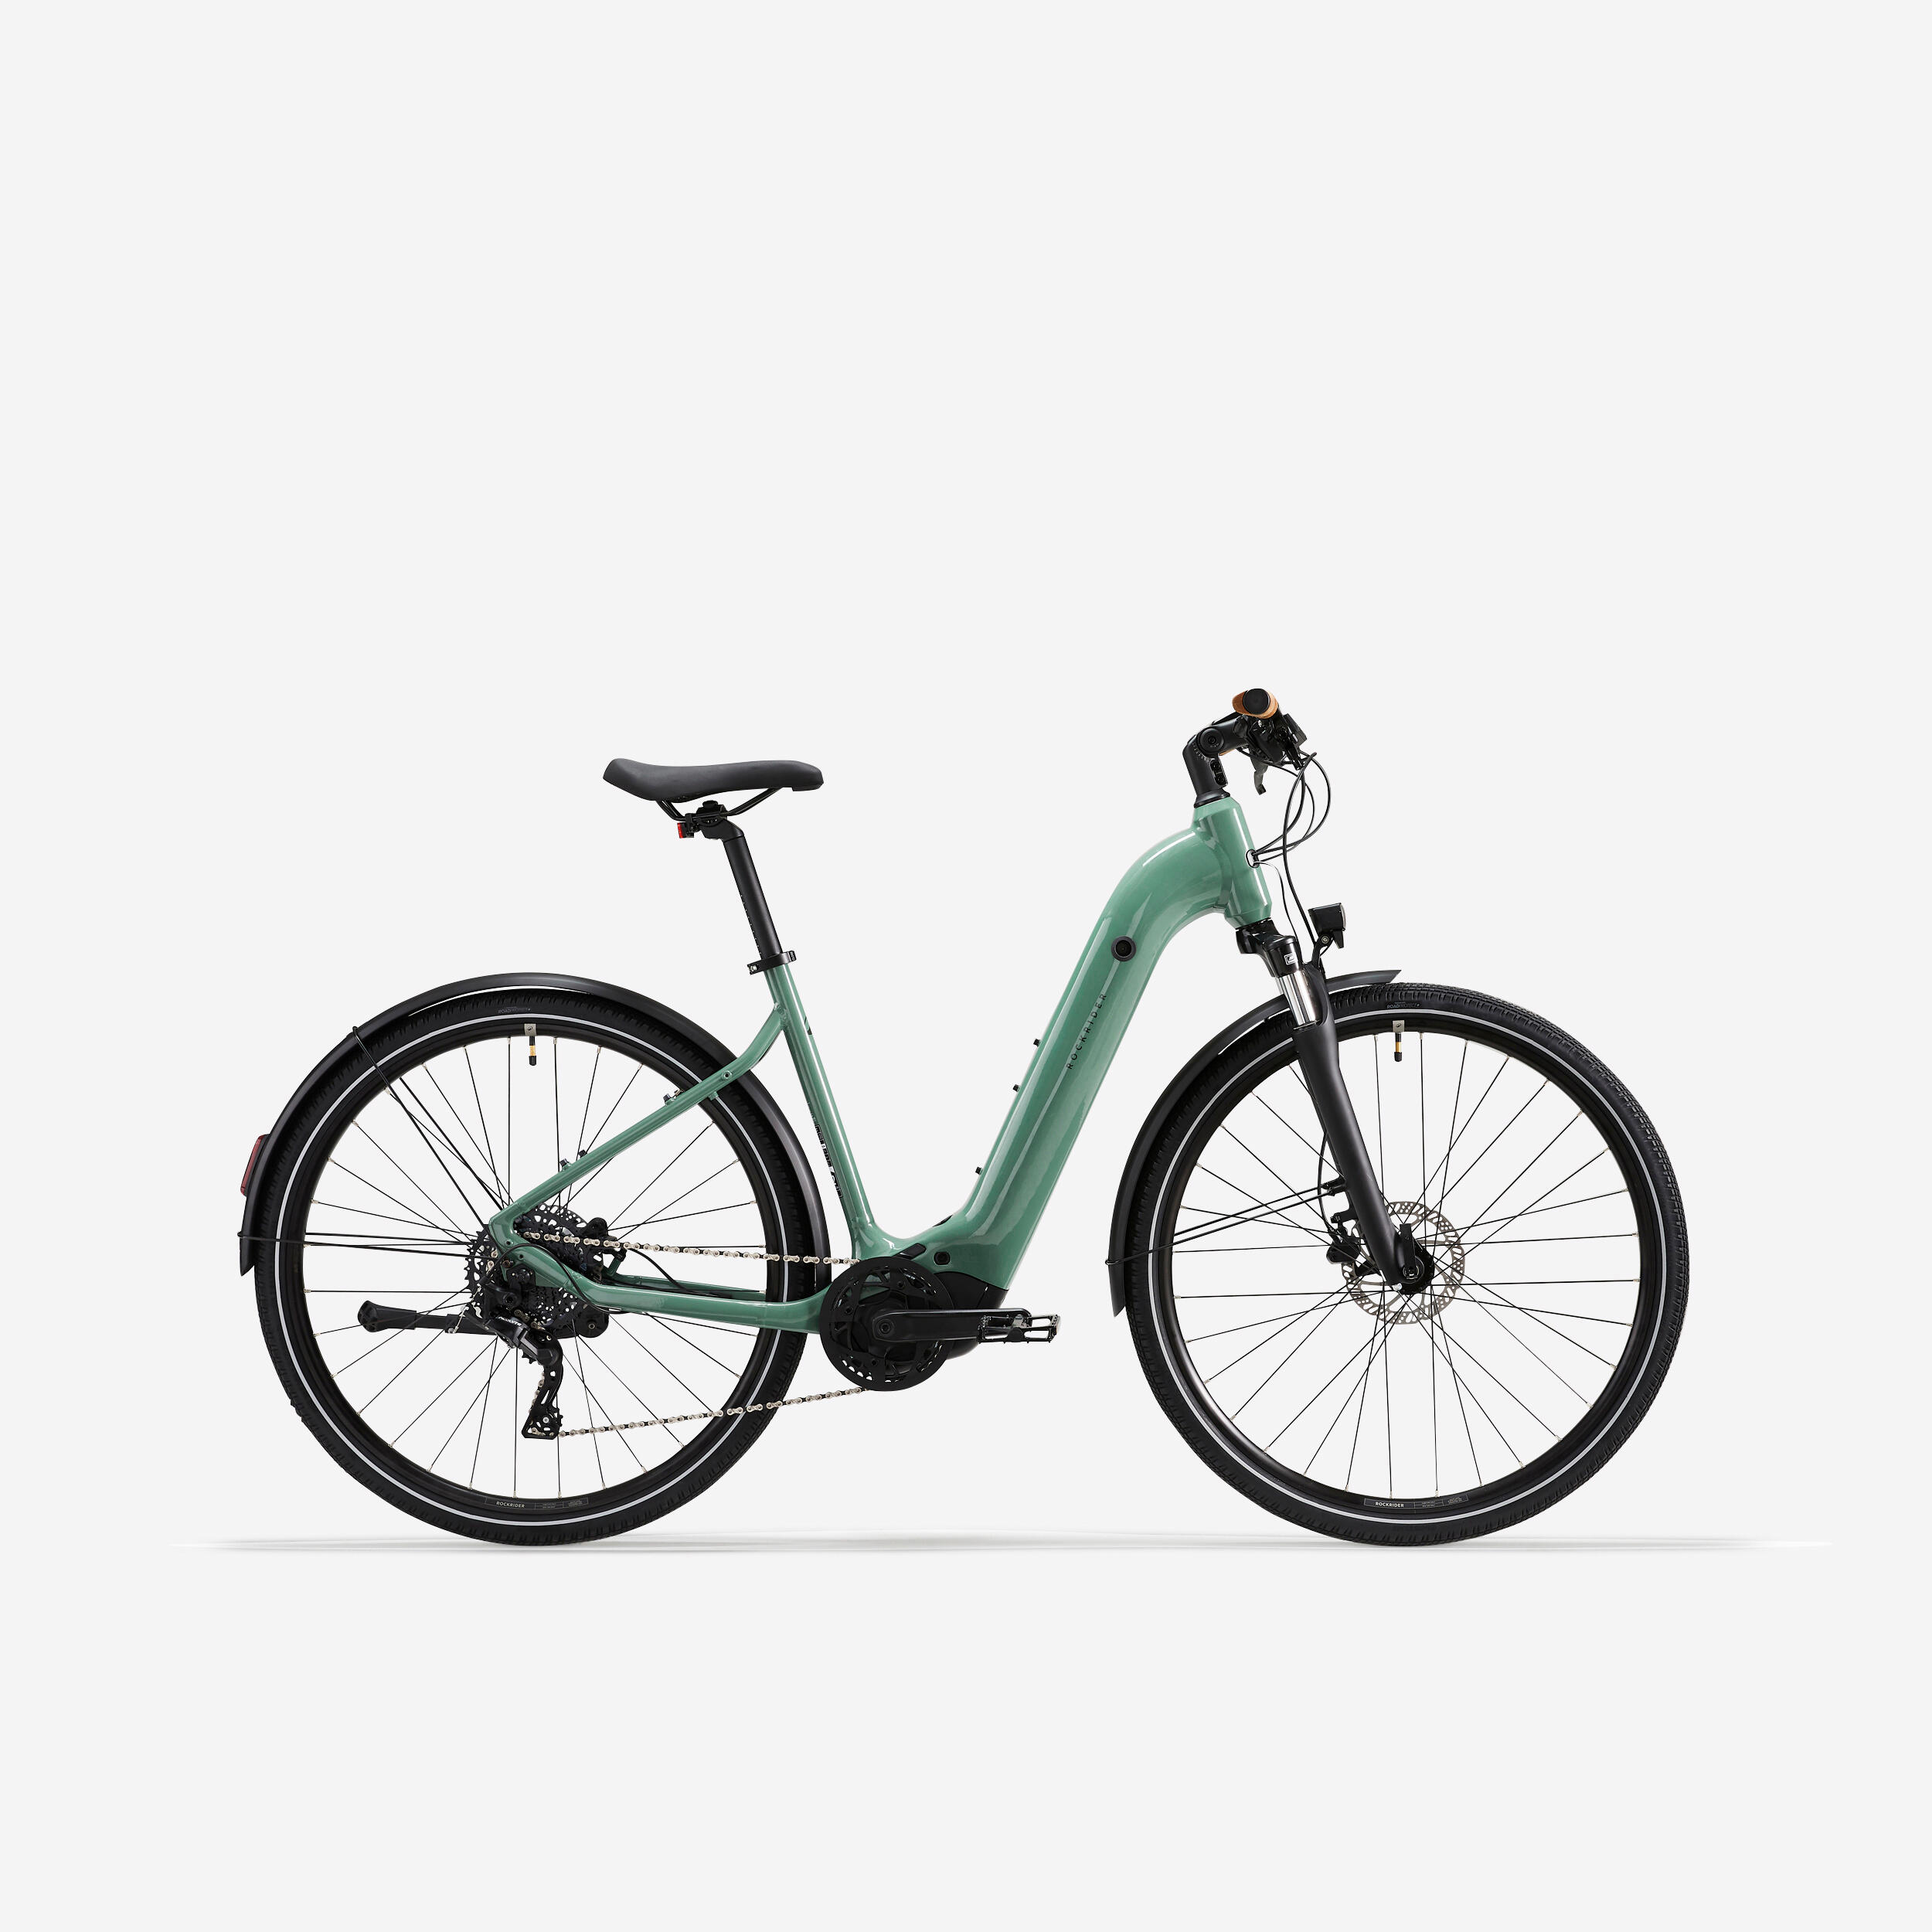 Low Frame Mid-Drive Motor Electric Hybrid Bike E-ACTV 500 - Green 1/7